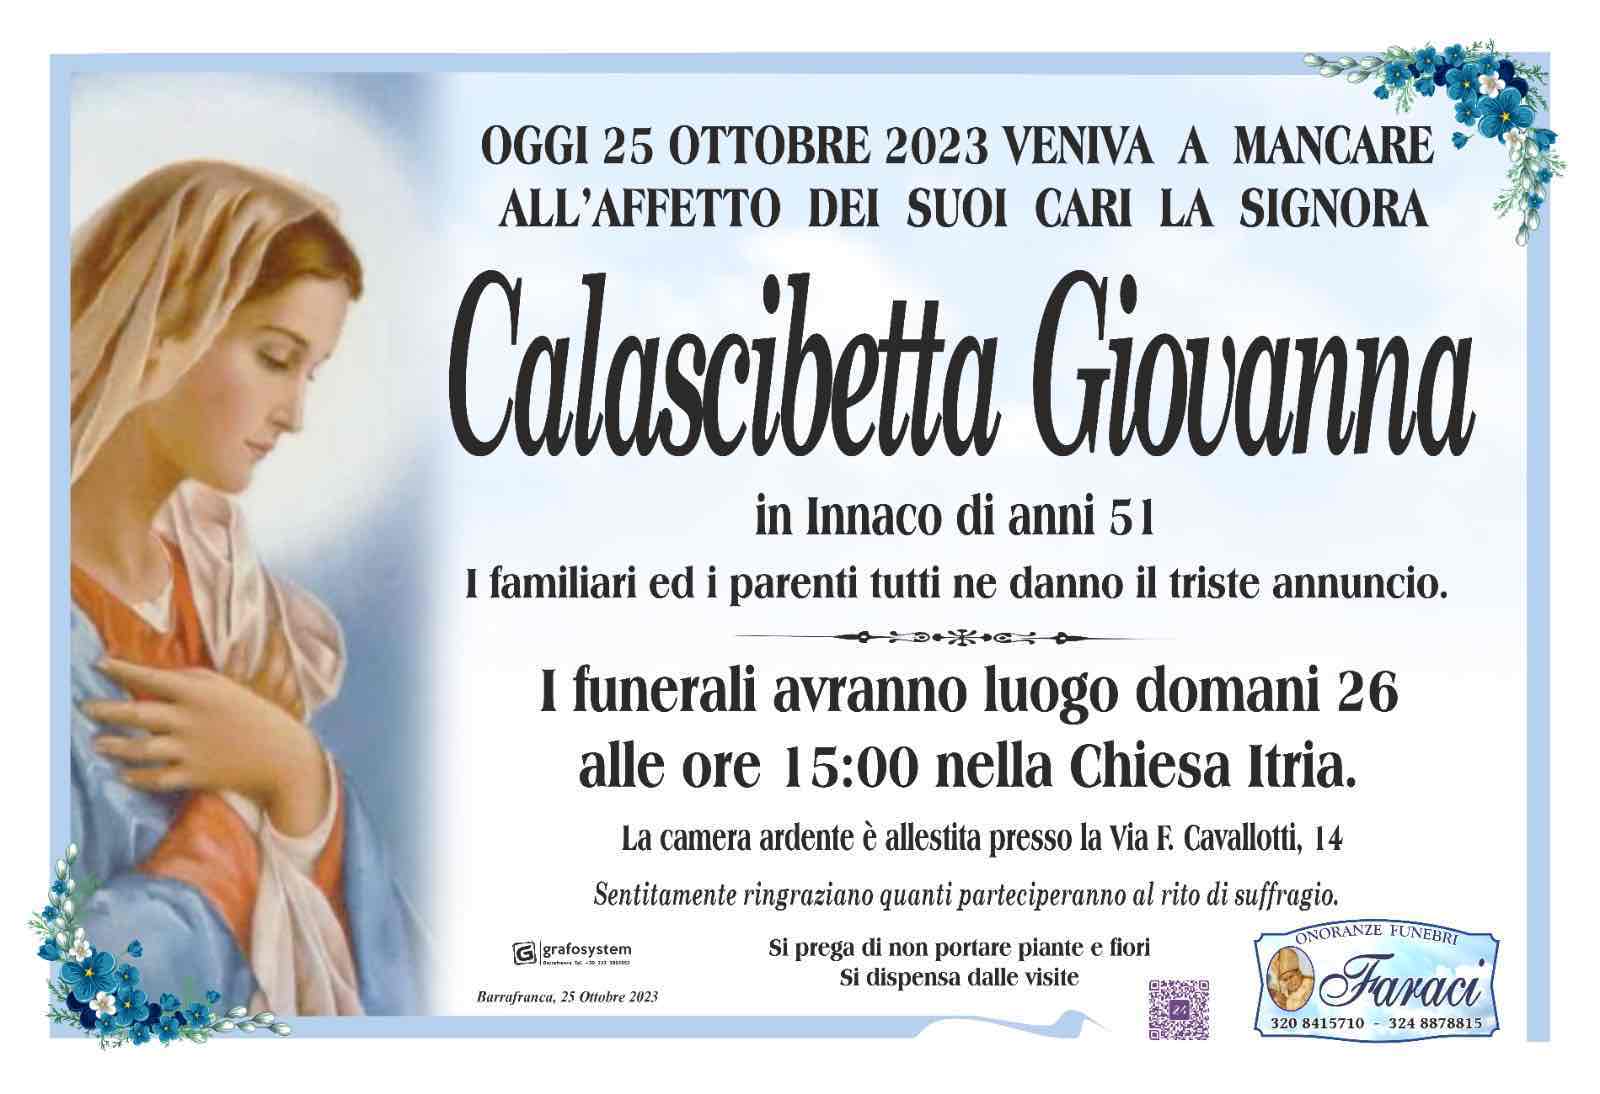 Giovanna Calascibetta